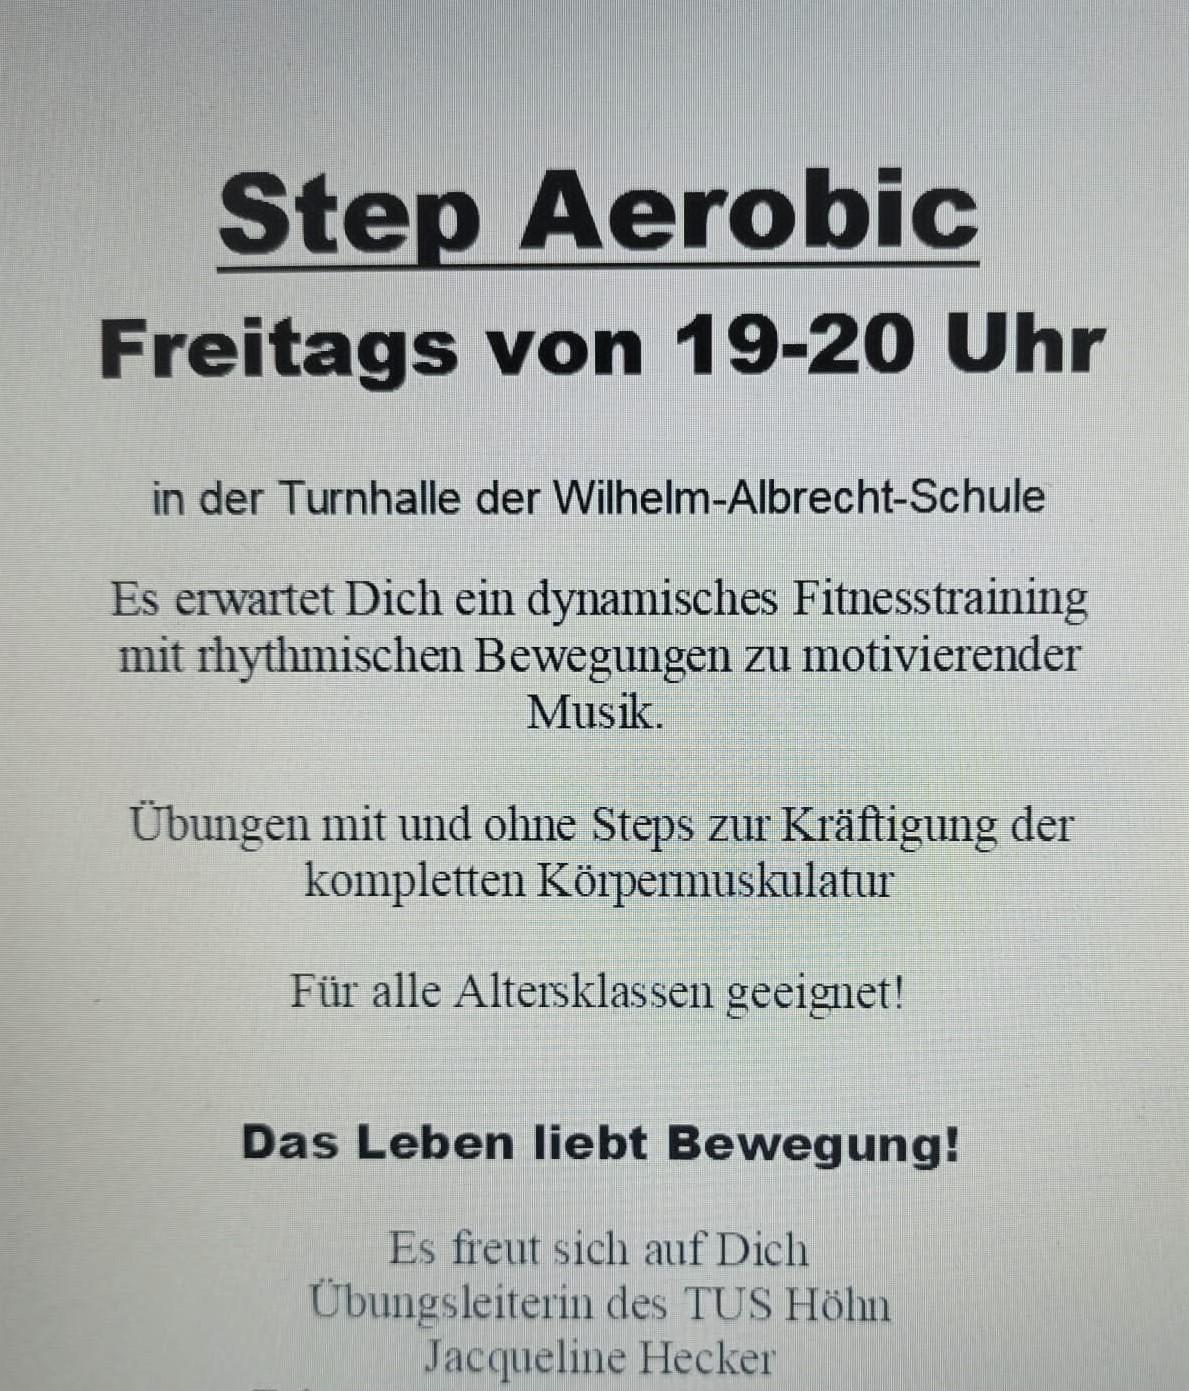 Step Aerobic